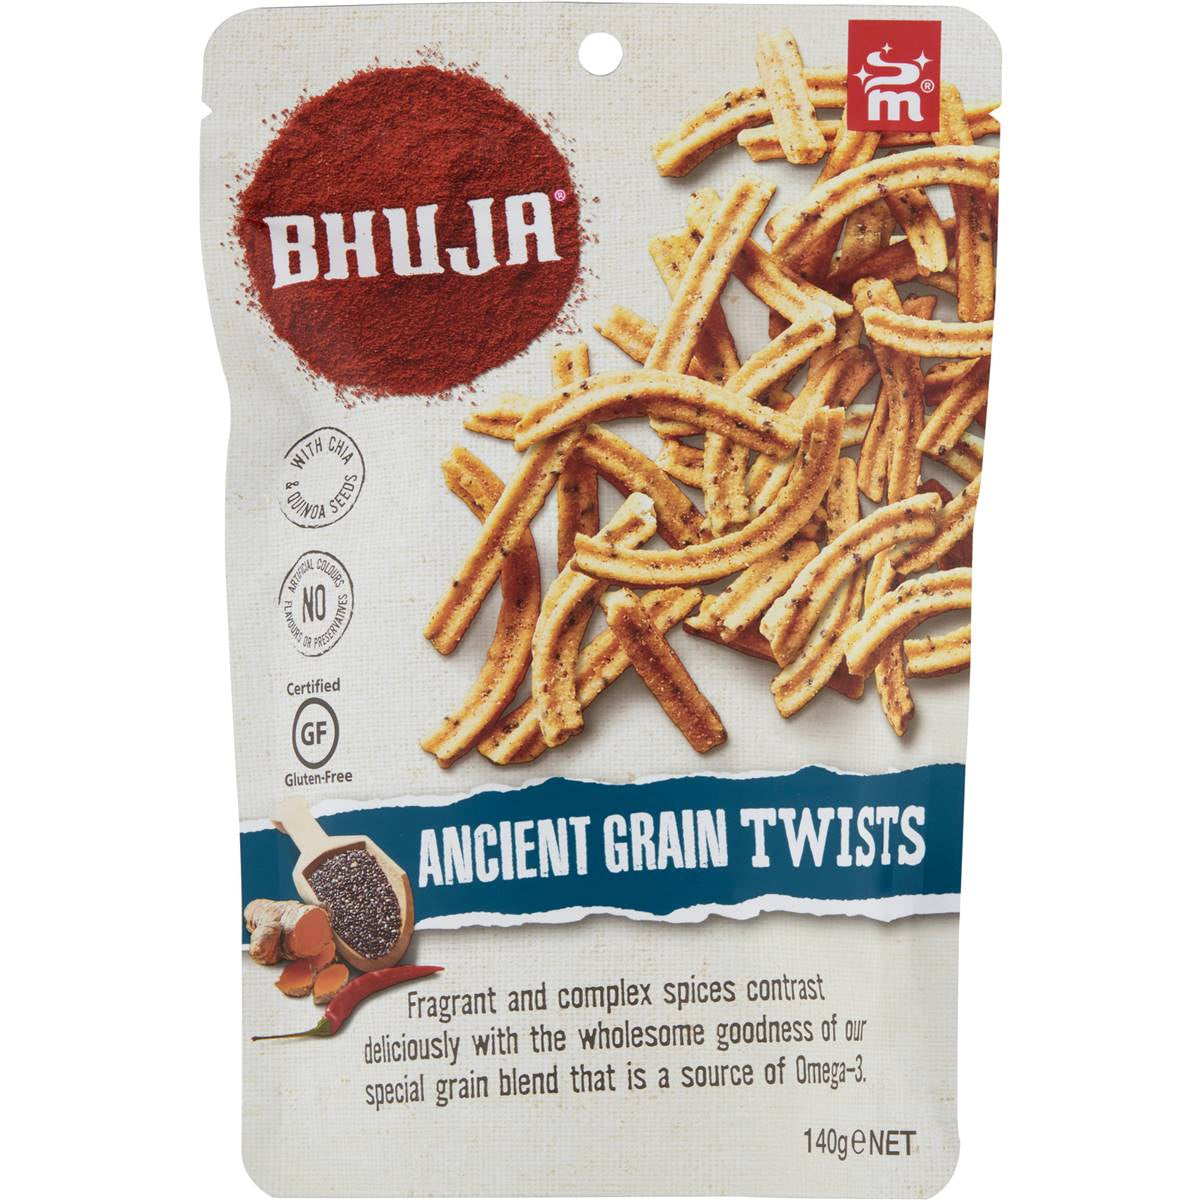 Bhuja Ancient Grains Mix